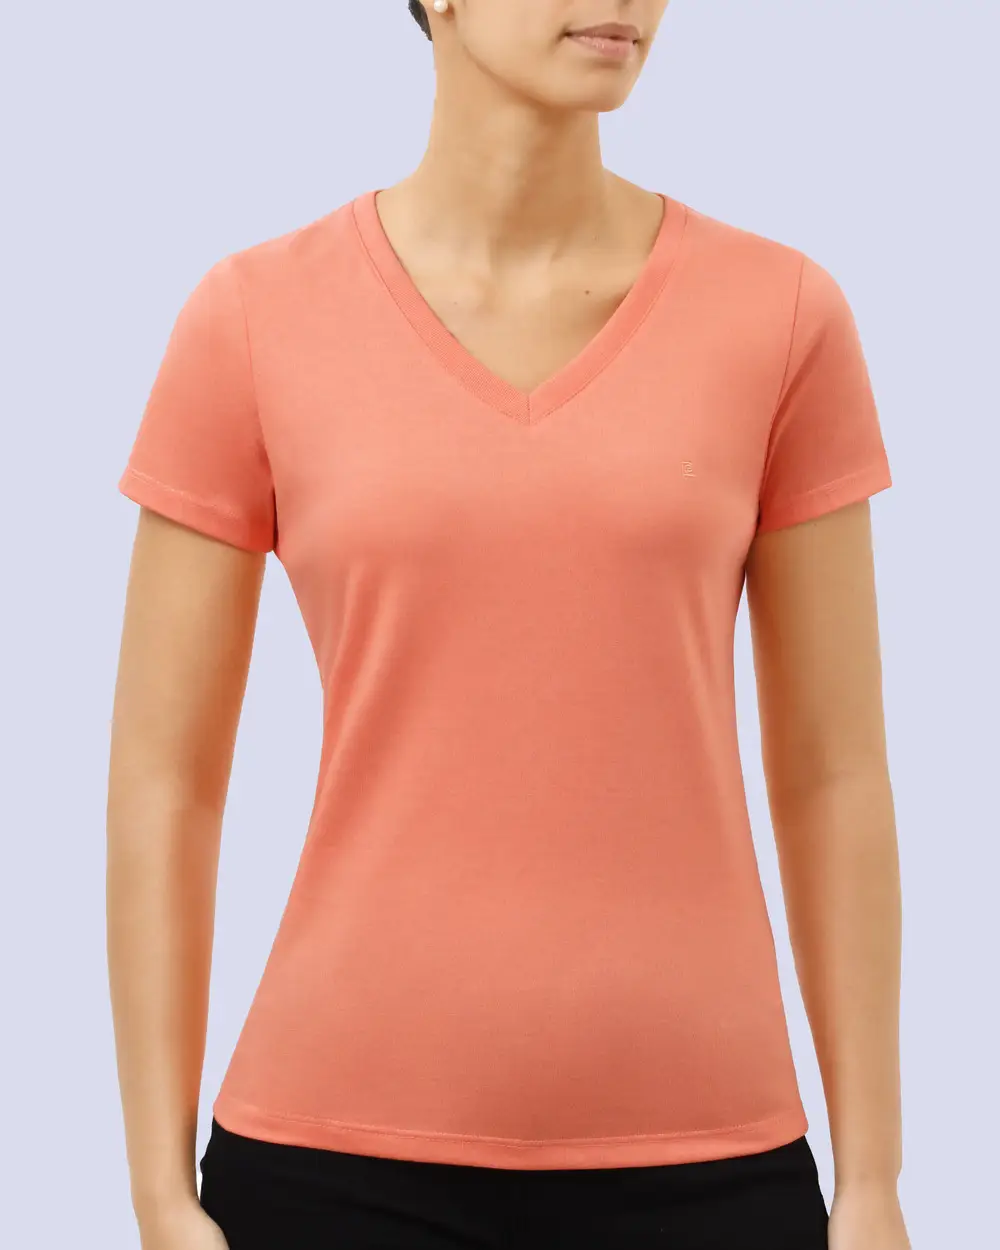 Camiseta dama cuello v color coral